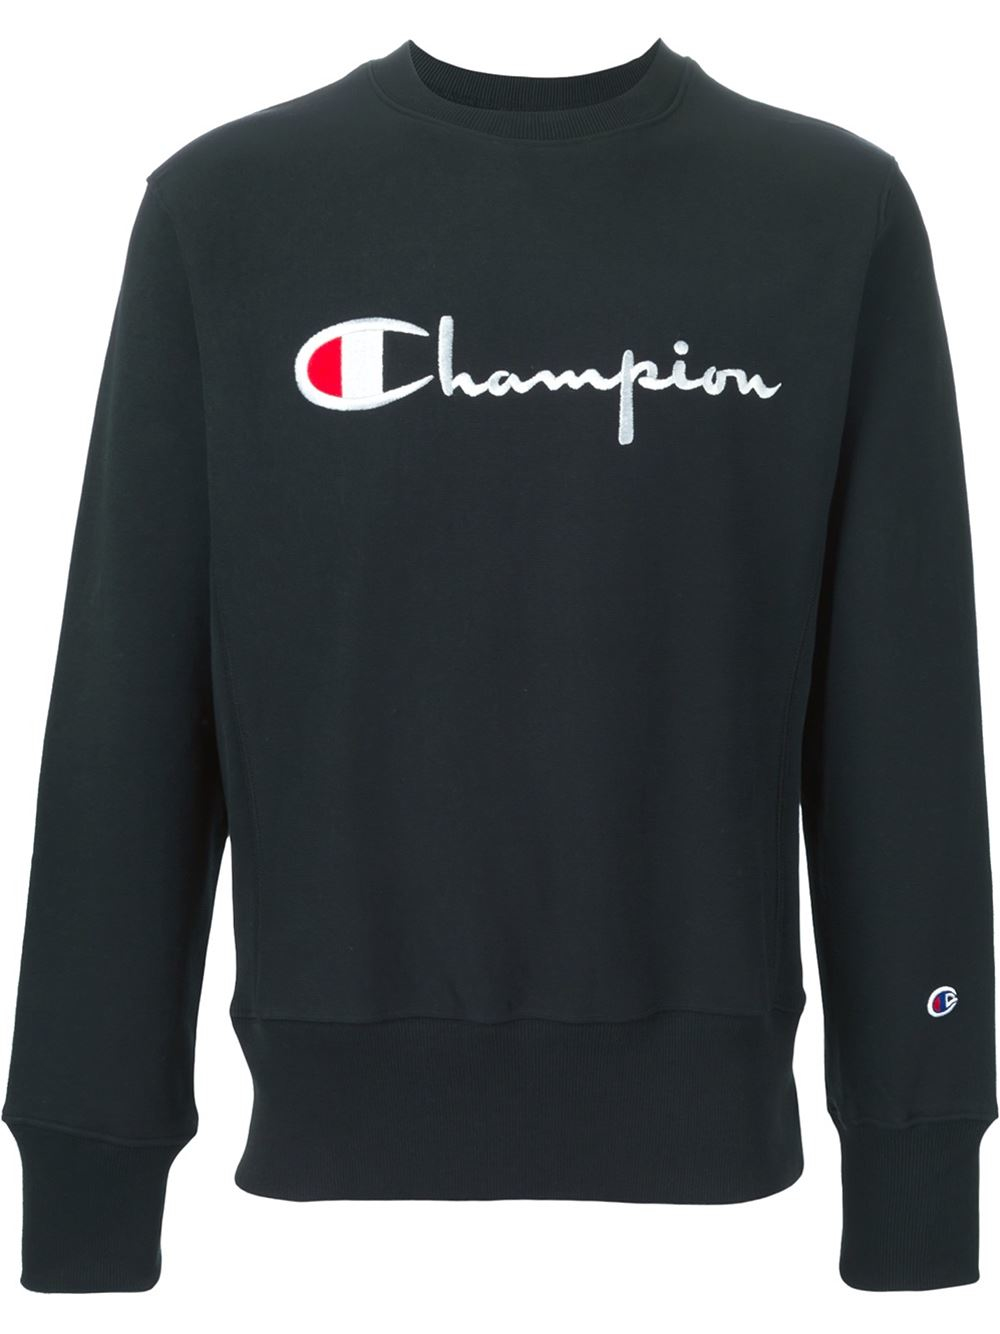 Lyst - Champion Logo Sweatshirt in Black for Men